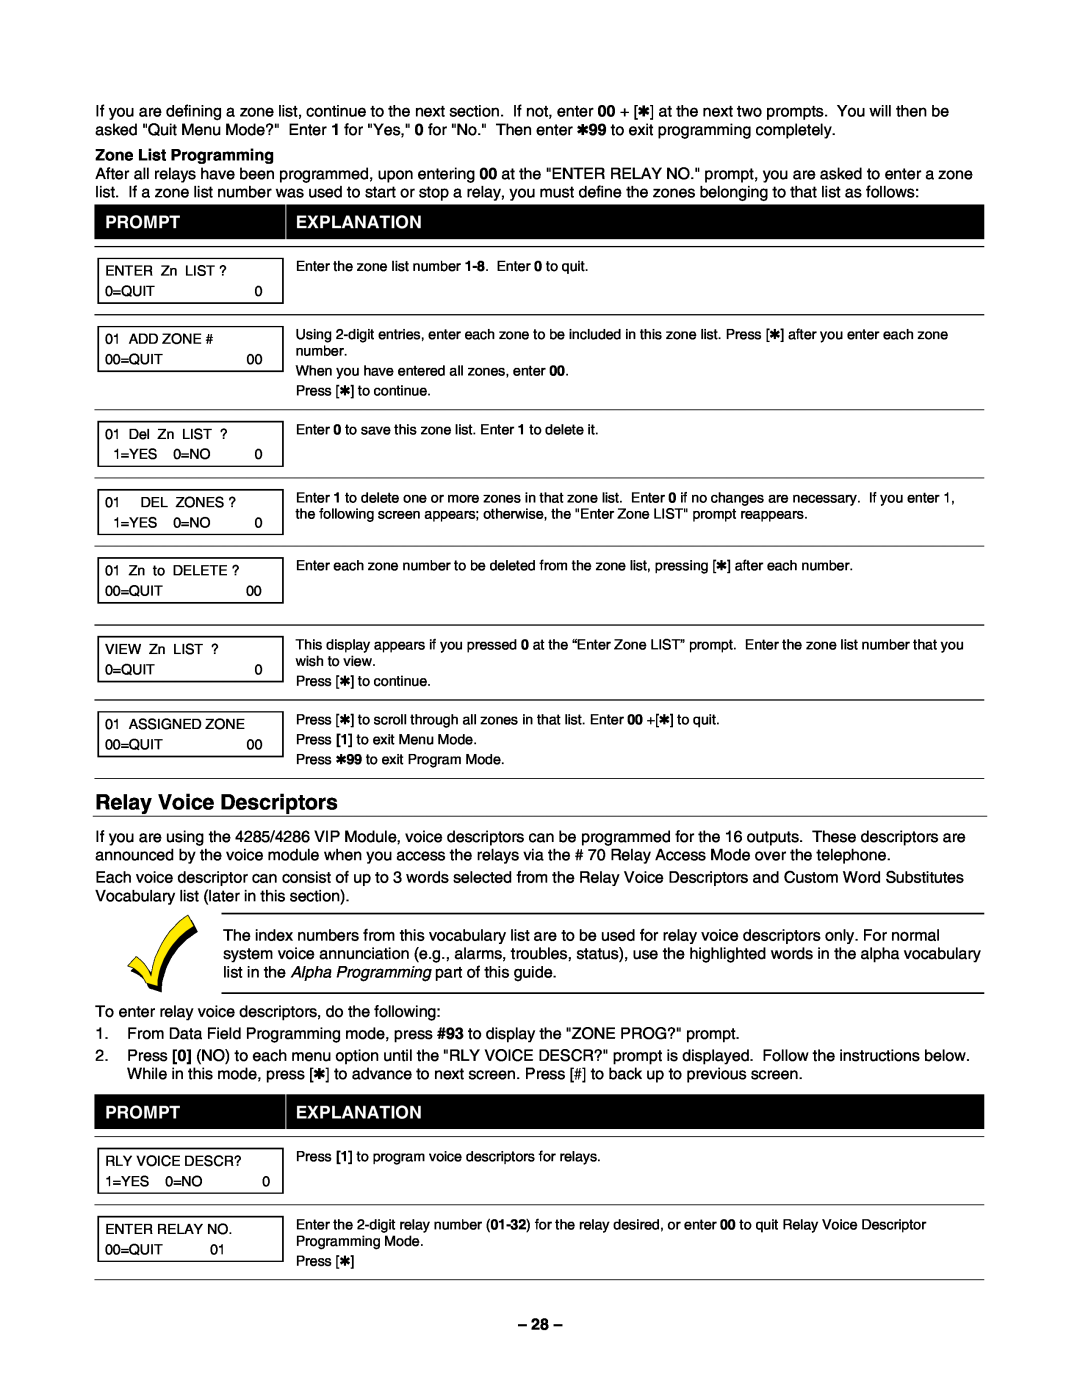 Honeywell Vista-50P/Vista-50PUL manual Relay Voice Descriptors, Promptexplanation, Zone List Programming 